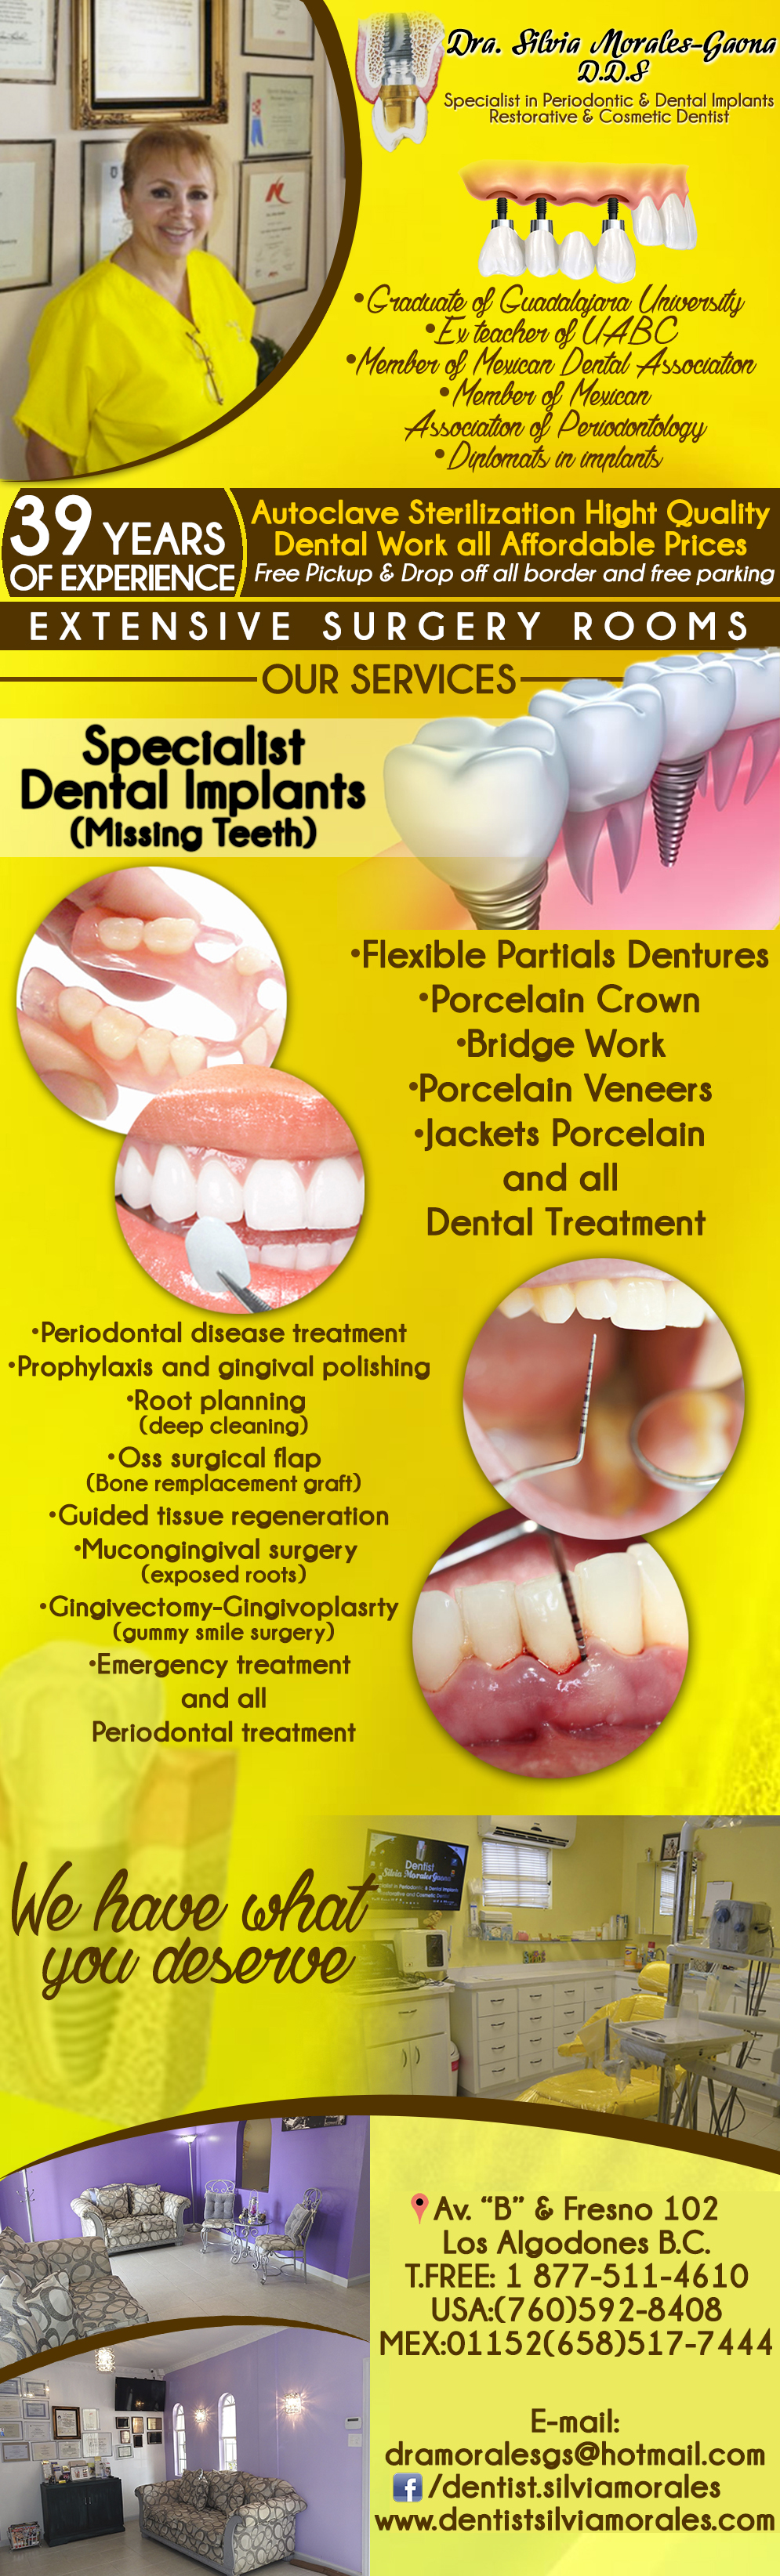 Dra. Silvia Morales-Gaona D.D.S.-Specialist in Periodontic & Dental Implants, Restorative & Cosmetic Dentist. Flexible Partials Dentures, Porcelain Crown, Bridge Work, Porcelain Veneers, Jackets Porcelain and all Dental Treatment.            